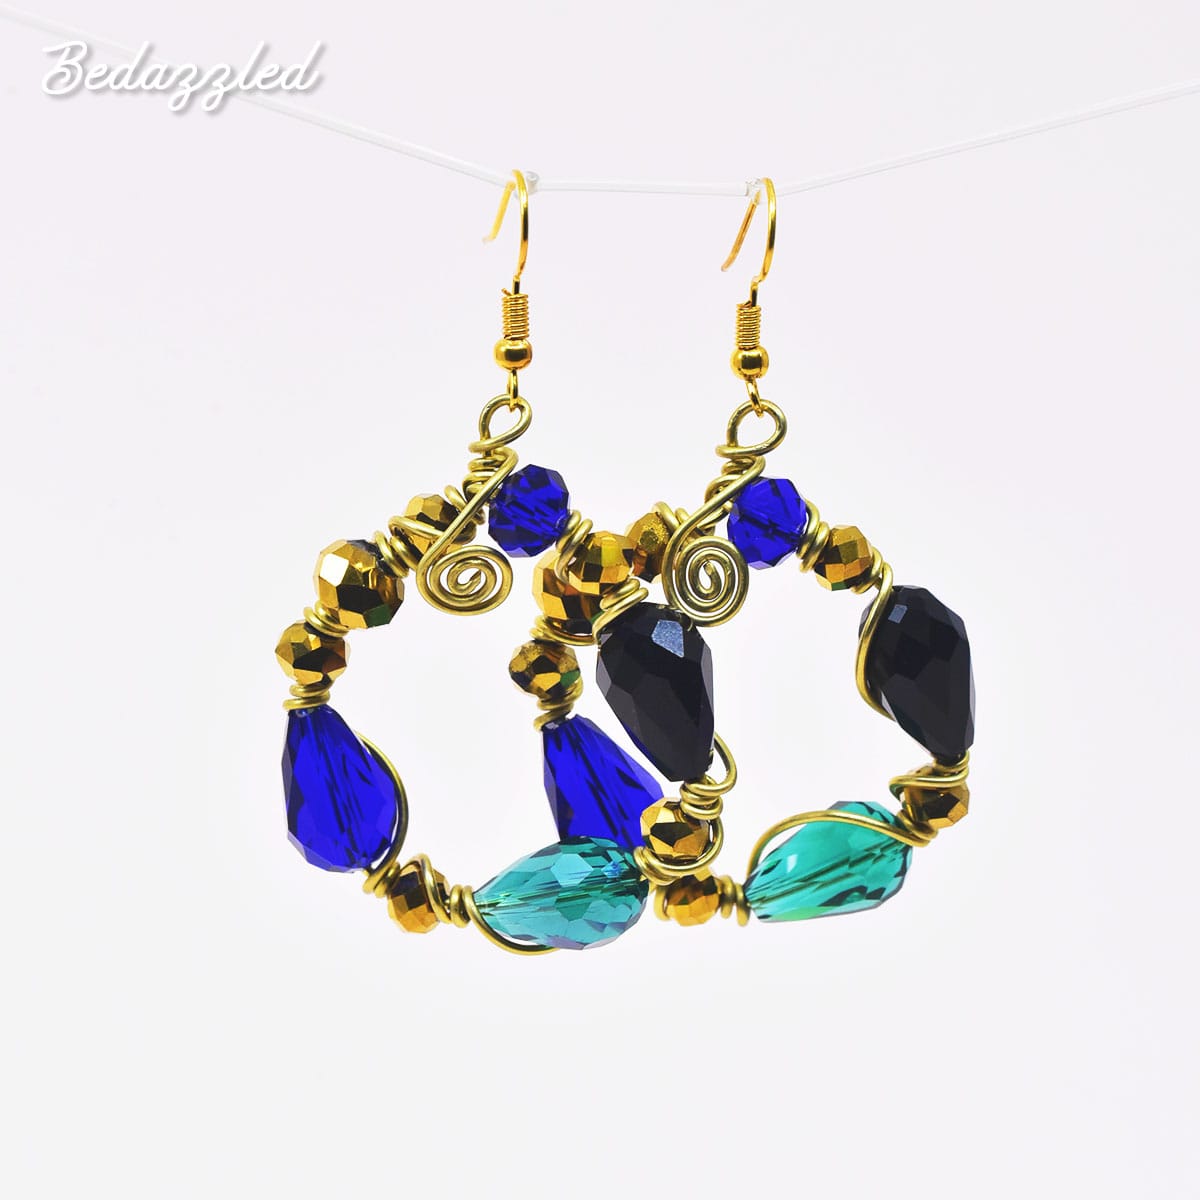 Bejeweled Style 5 - Earrings